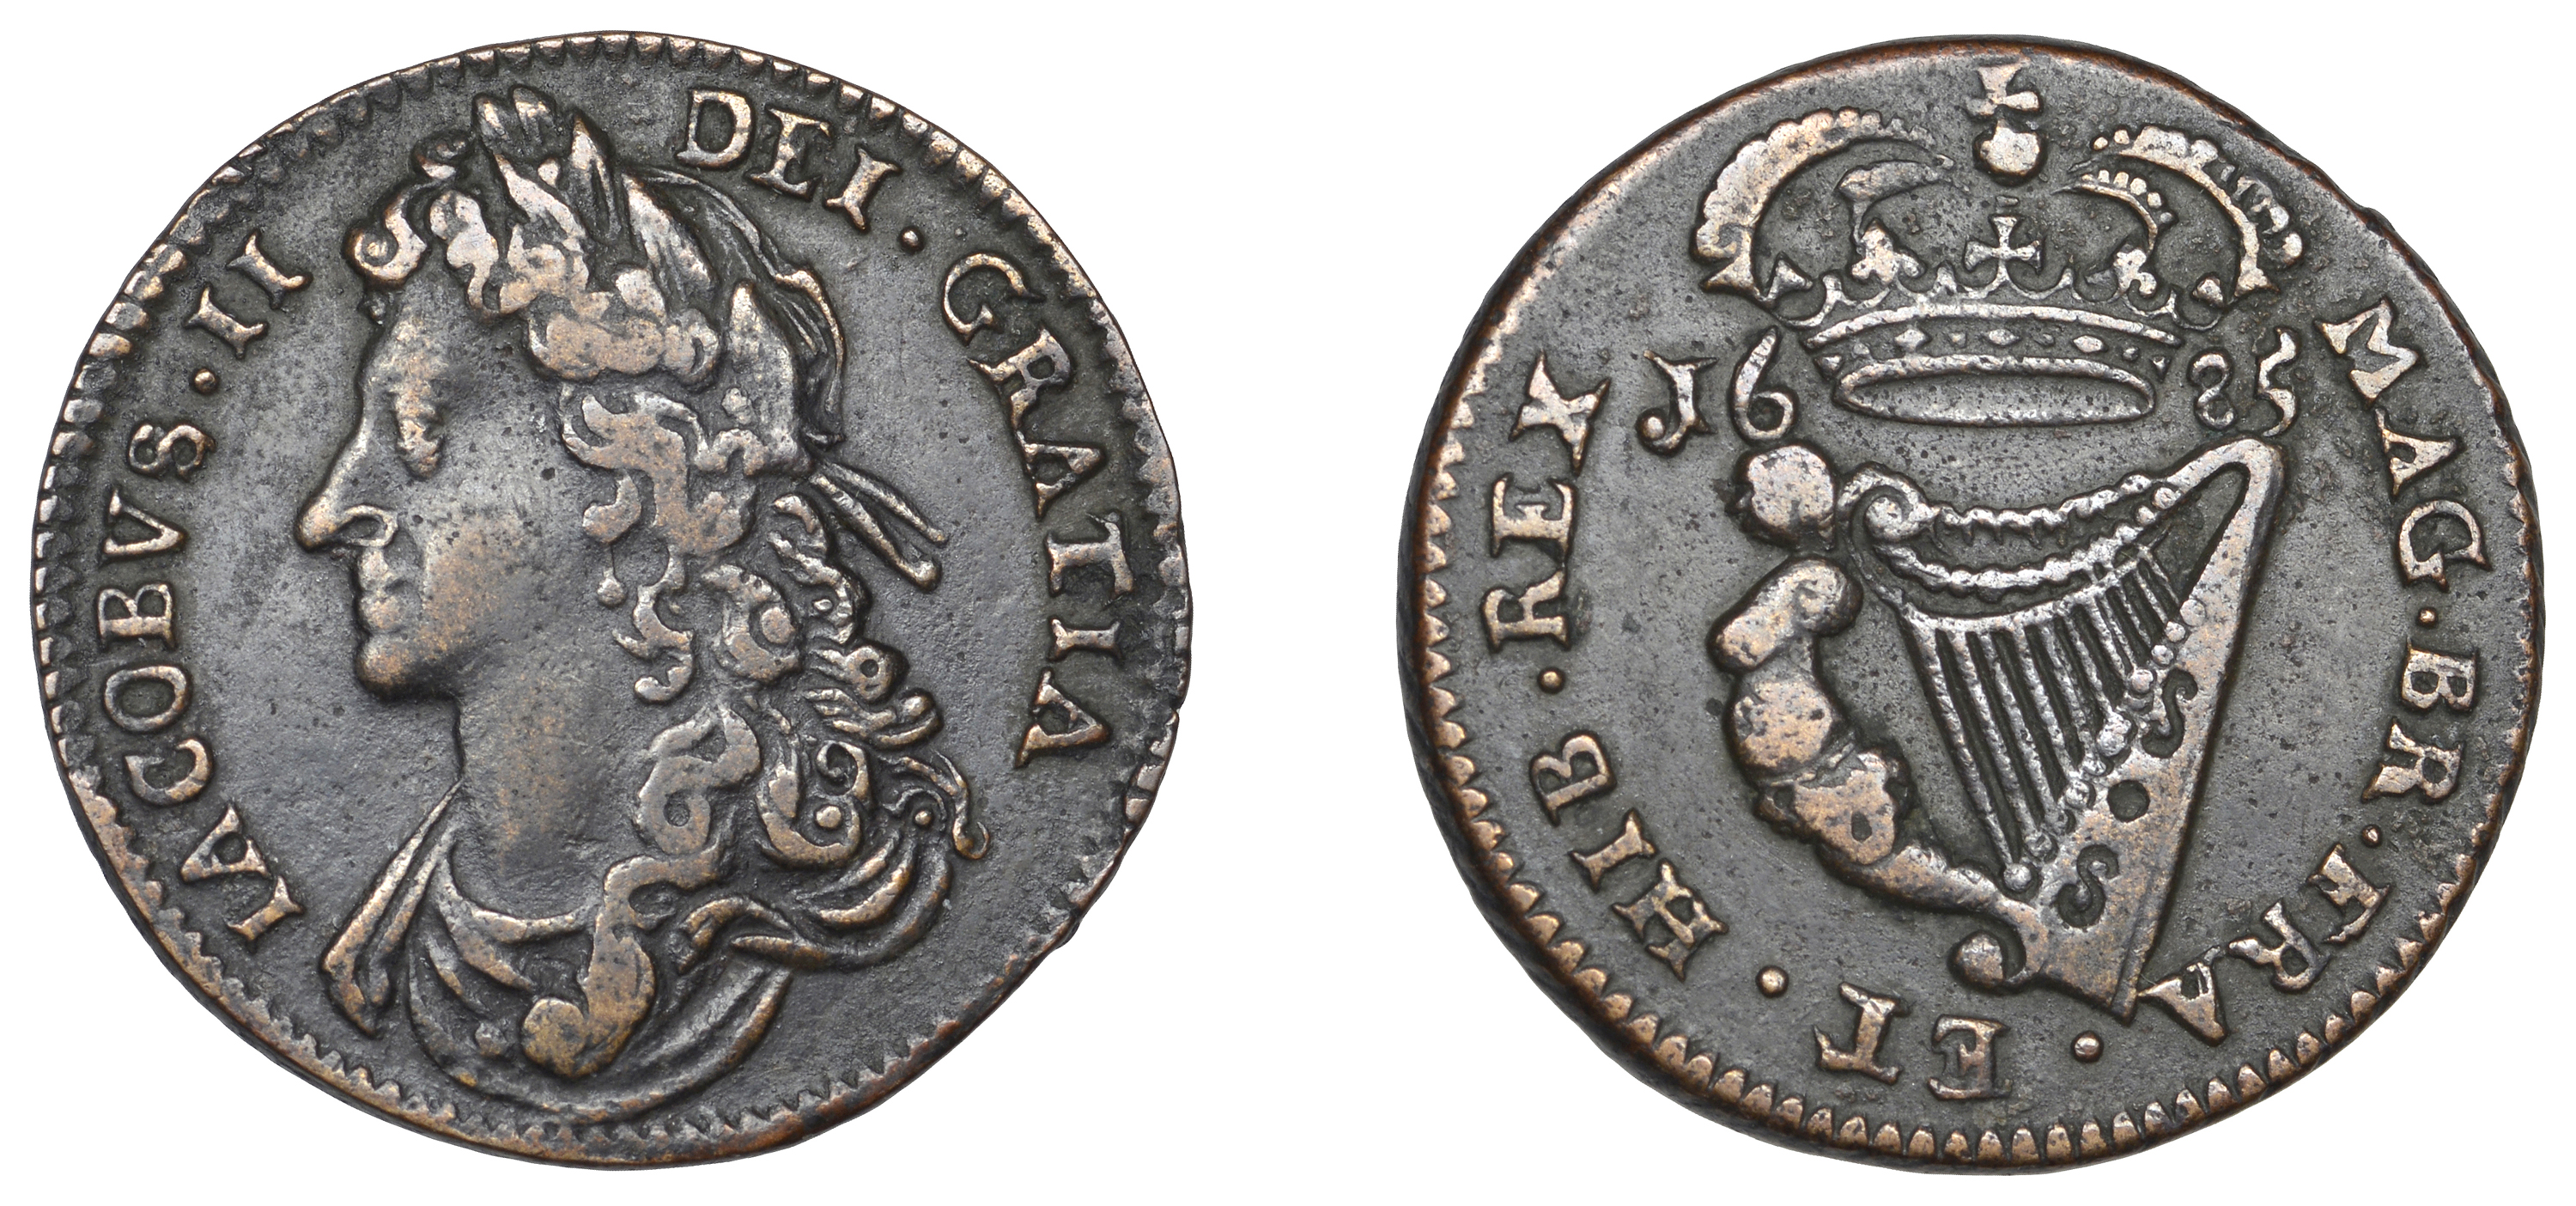 James II (1685-1691), Halfpenny, 1685, die-axis 6h (S 6576). Good fine, scarce Â£90-Â£120